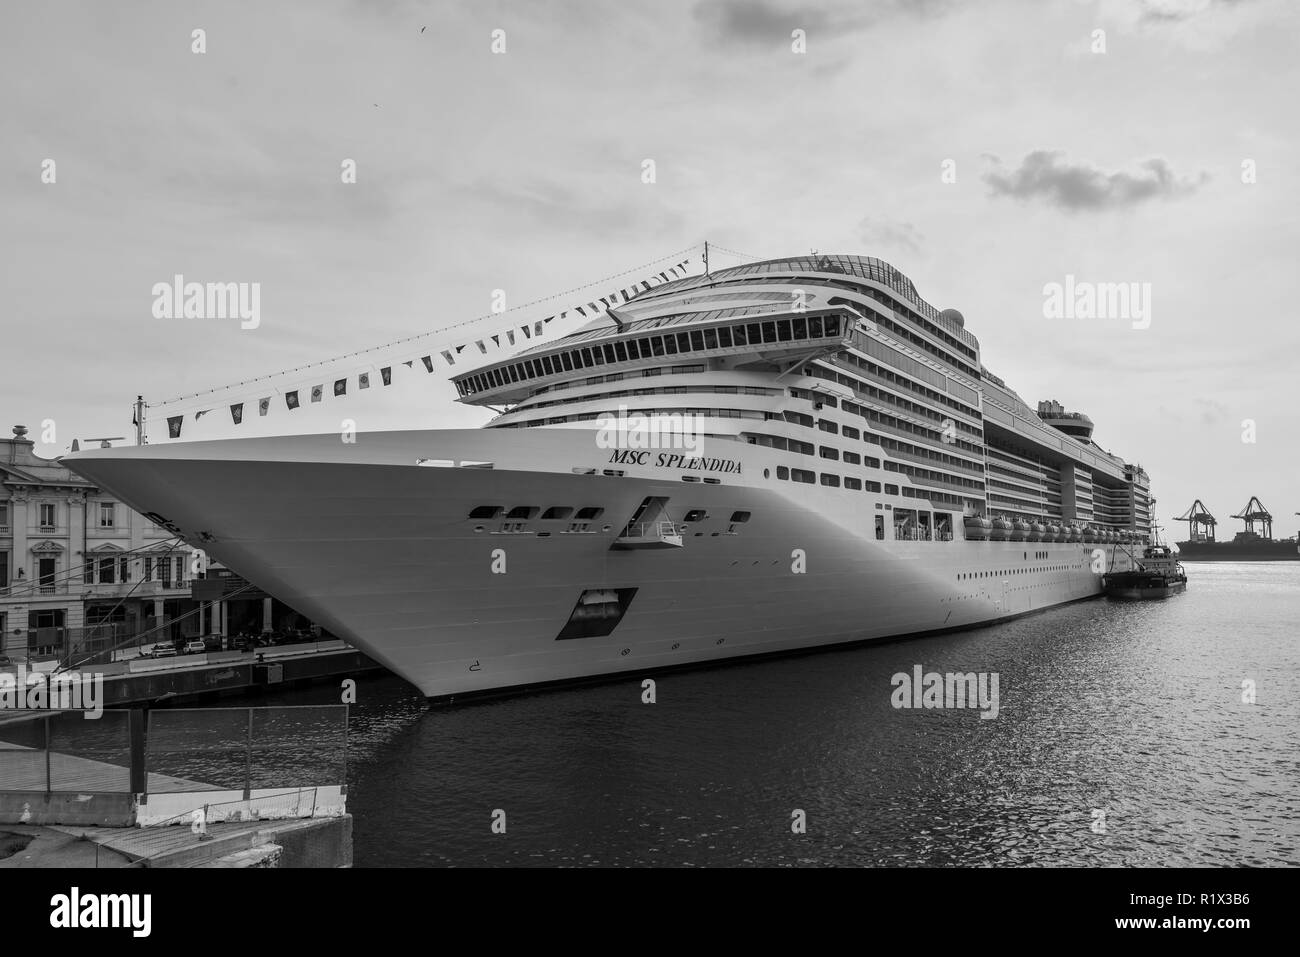 Genoa, Italy - October 28, 2017: MSC Splendida, a cruise ship owned by MSC Cruises moored in the port of Genoa (Genova), Liguria, Mediterranean coast, Stock Photo